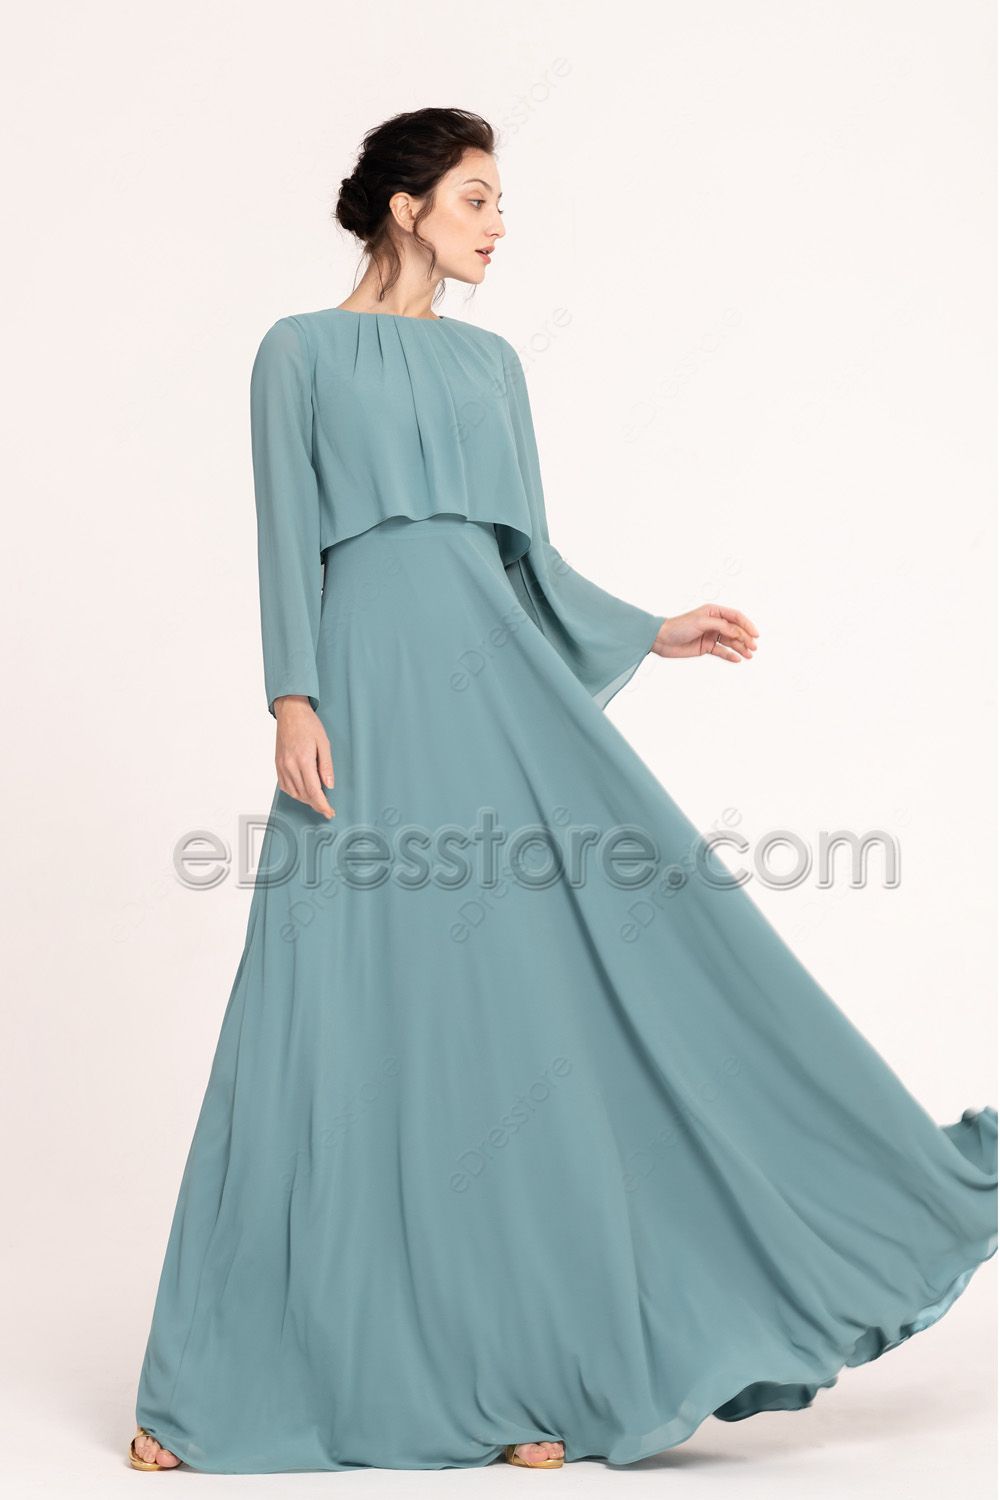 Seaglass Green Popover Modest Bridesmaid Dresses Long Sleeves | eDresstore